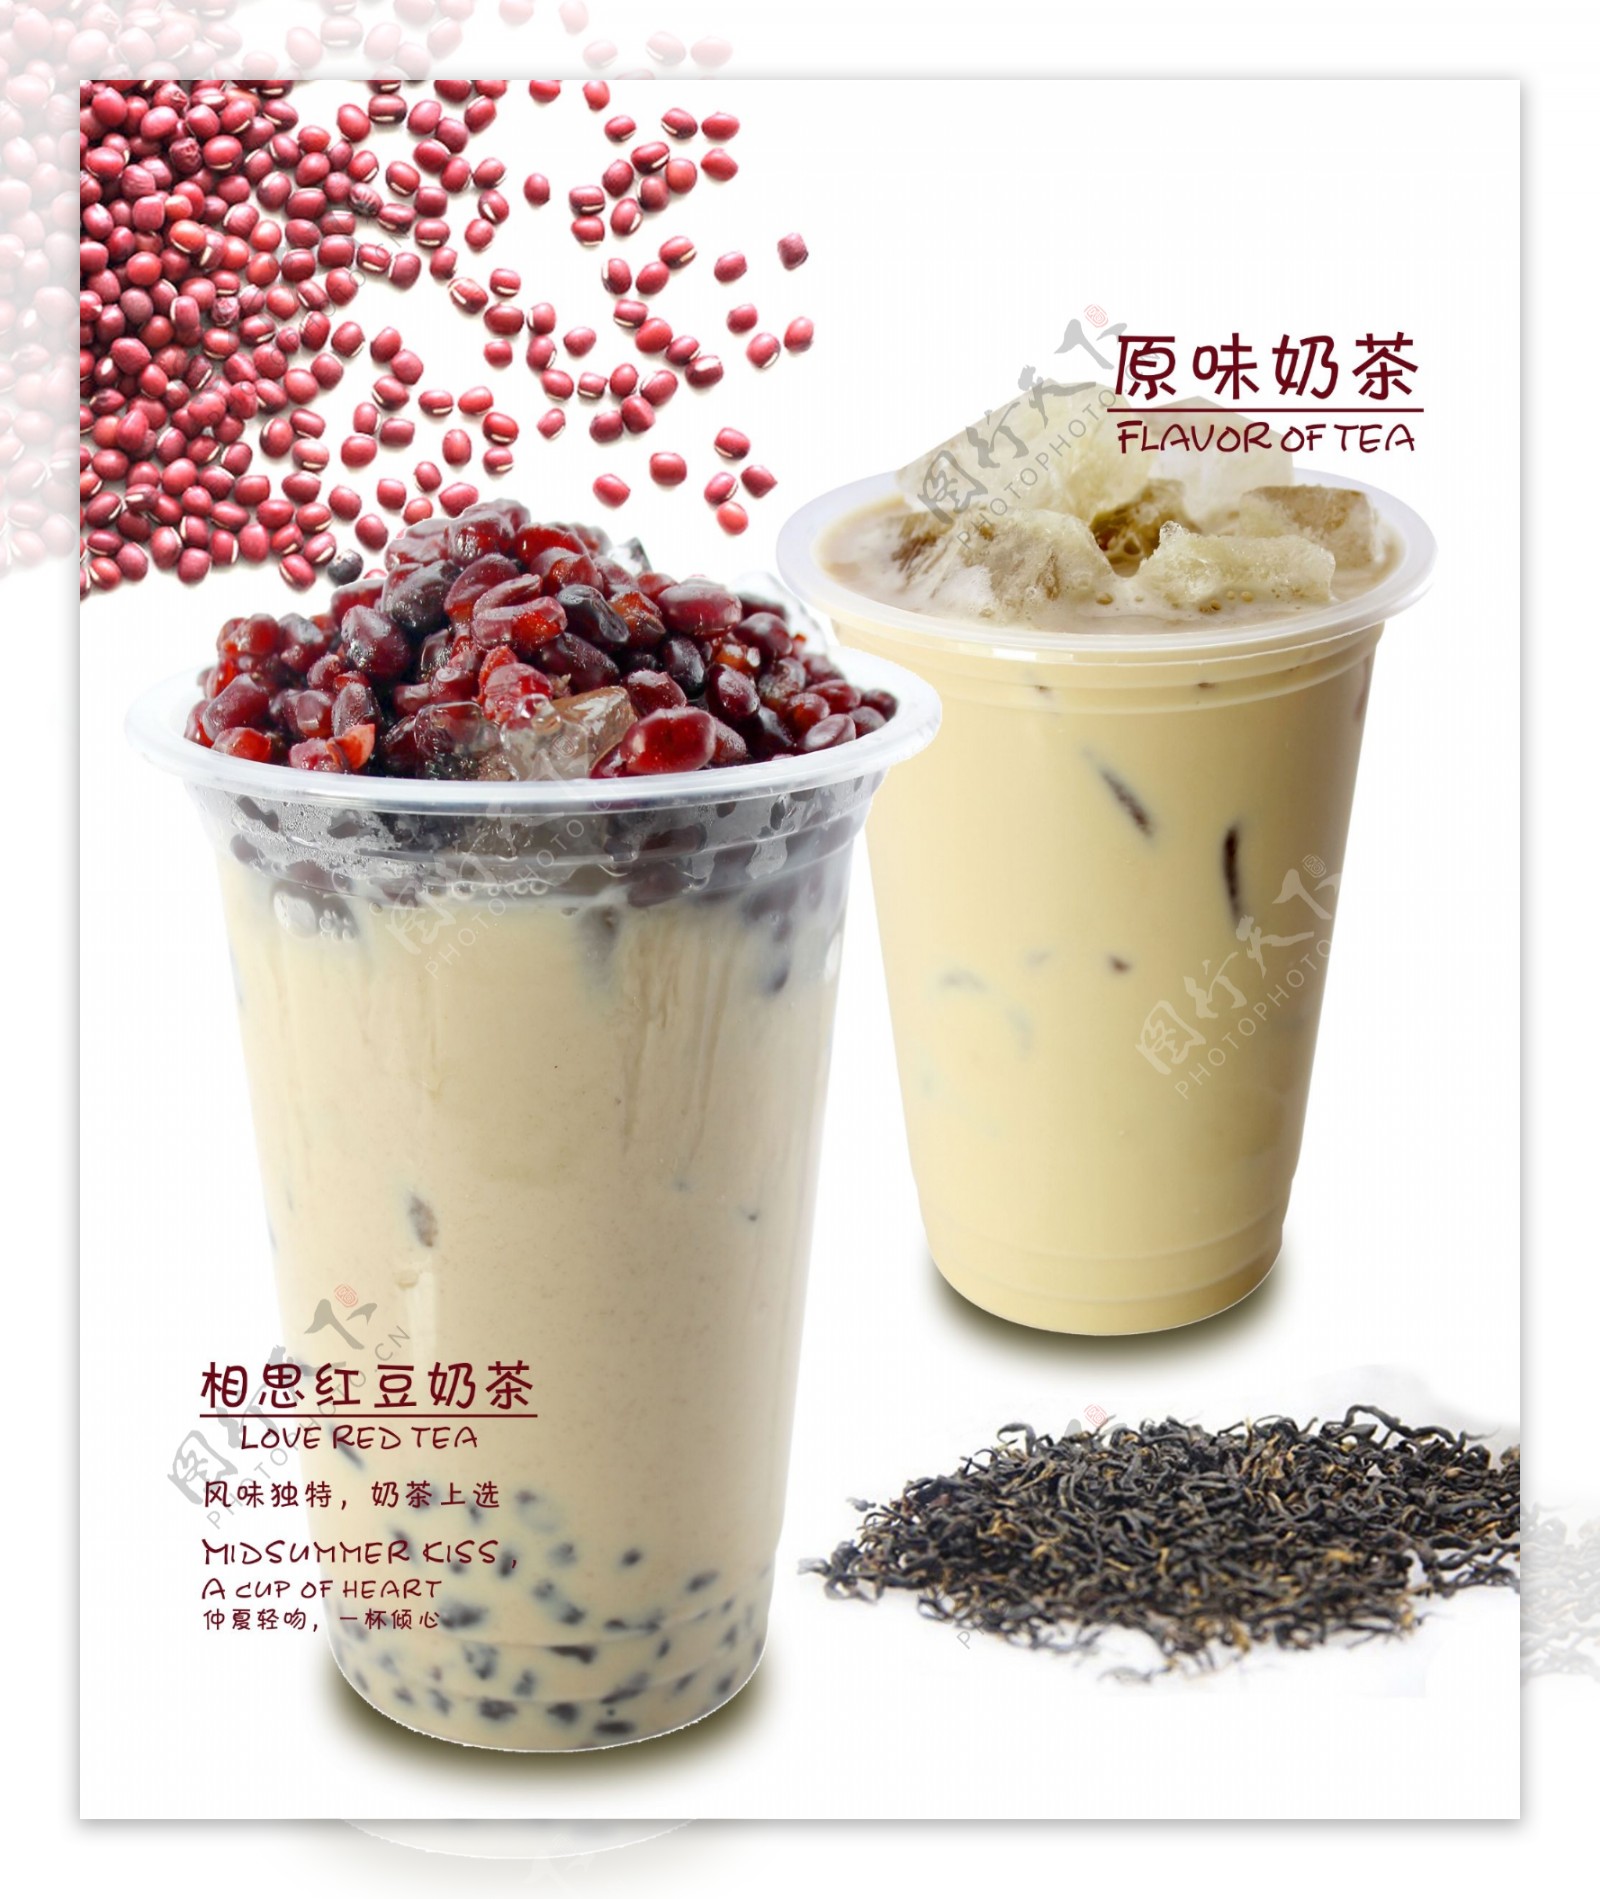 Royaltea 皇茶 ：五福城的奶茶革命，体验皇室般的奢华与品质。| Jomeat Delight